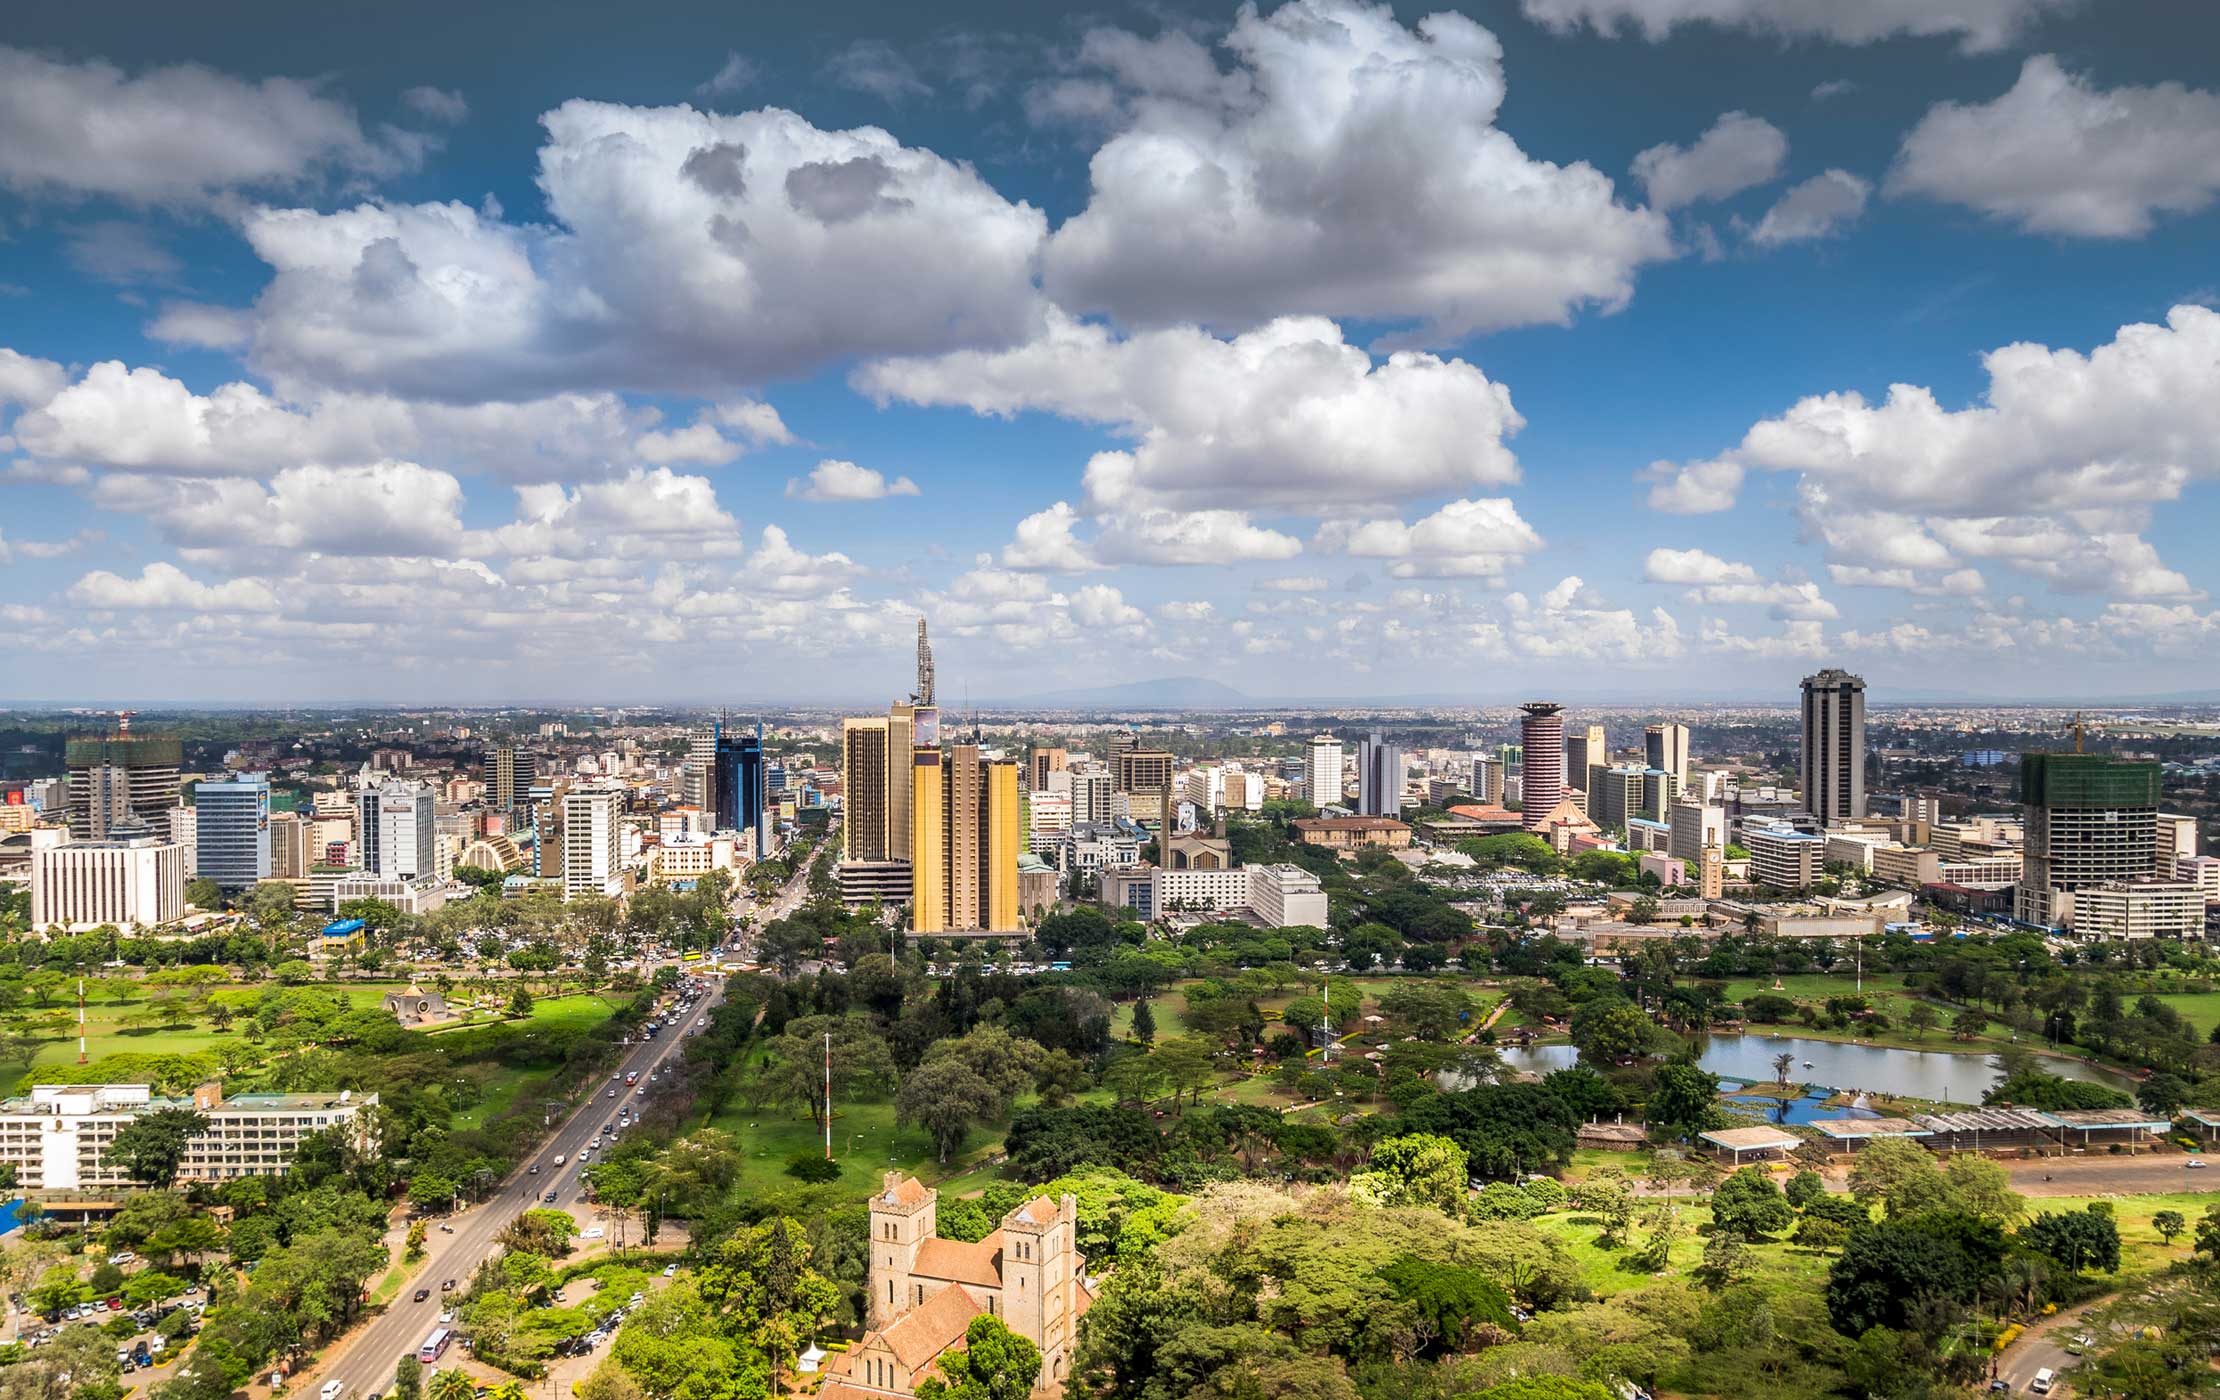 Nairobi Zoning - Commercialke proposed law